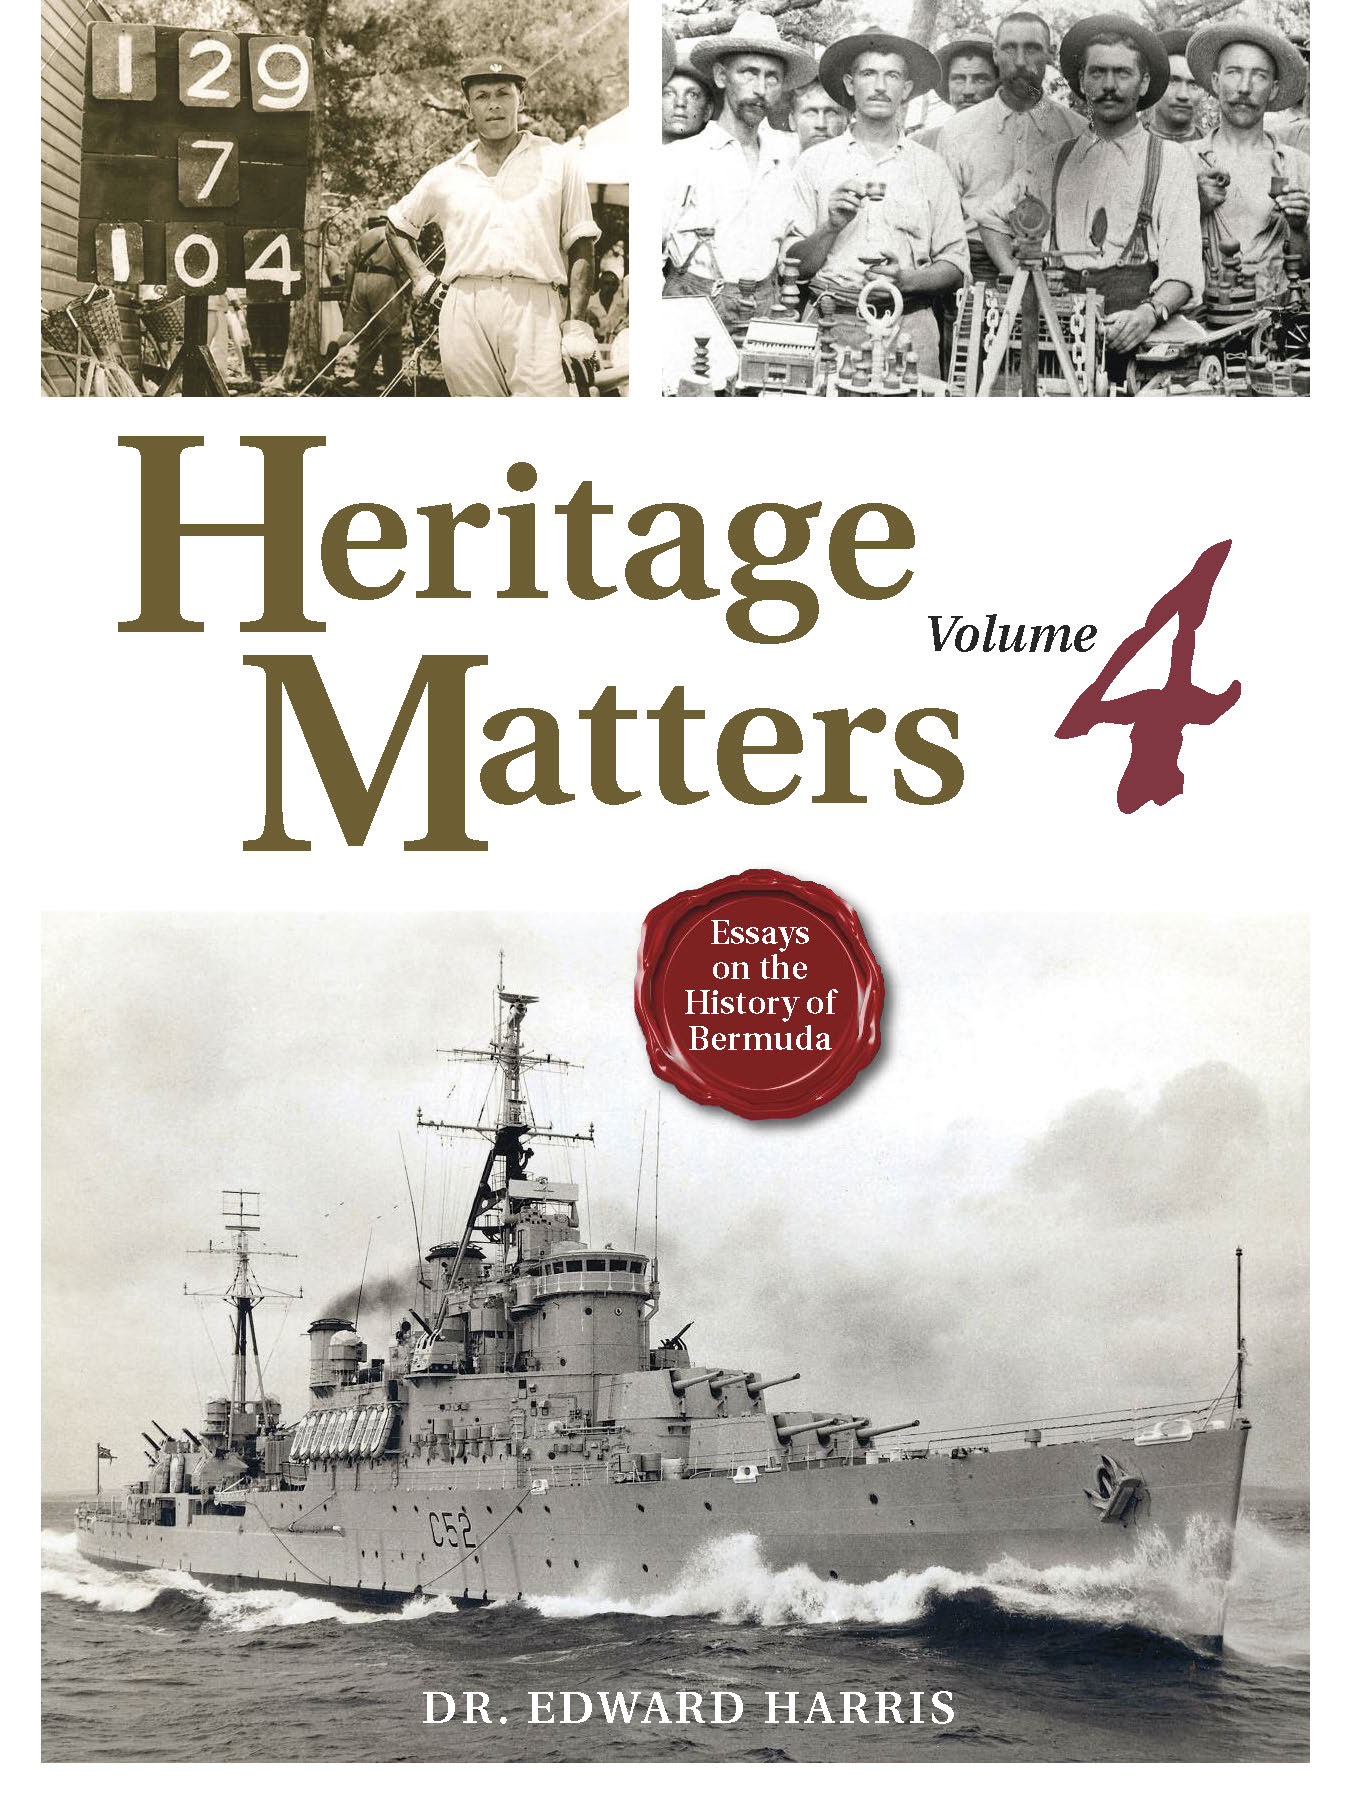 Heritage Matters Volume 4